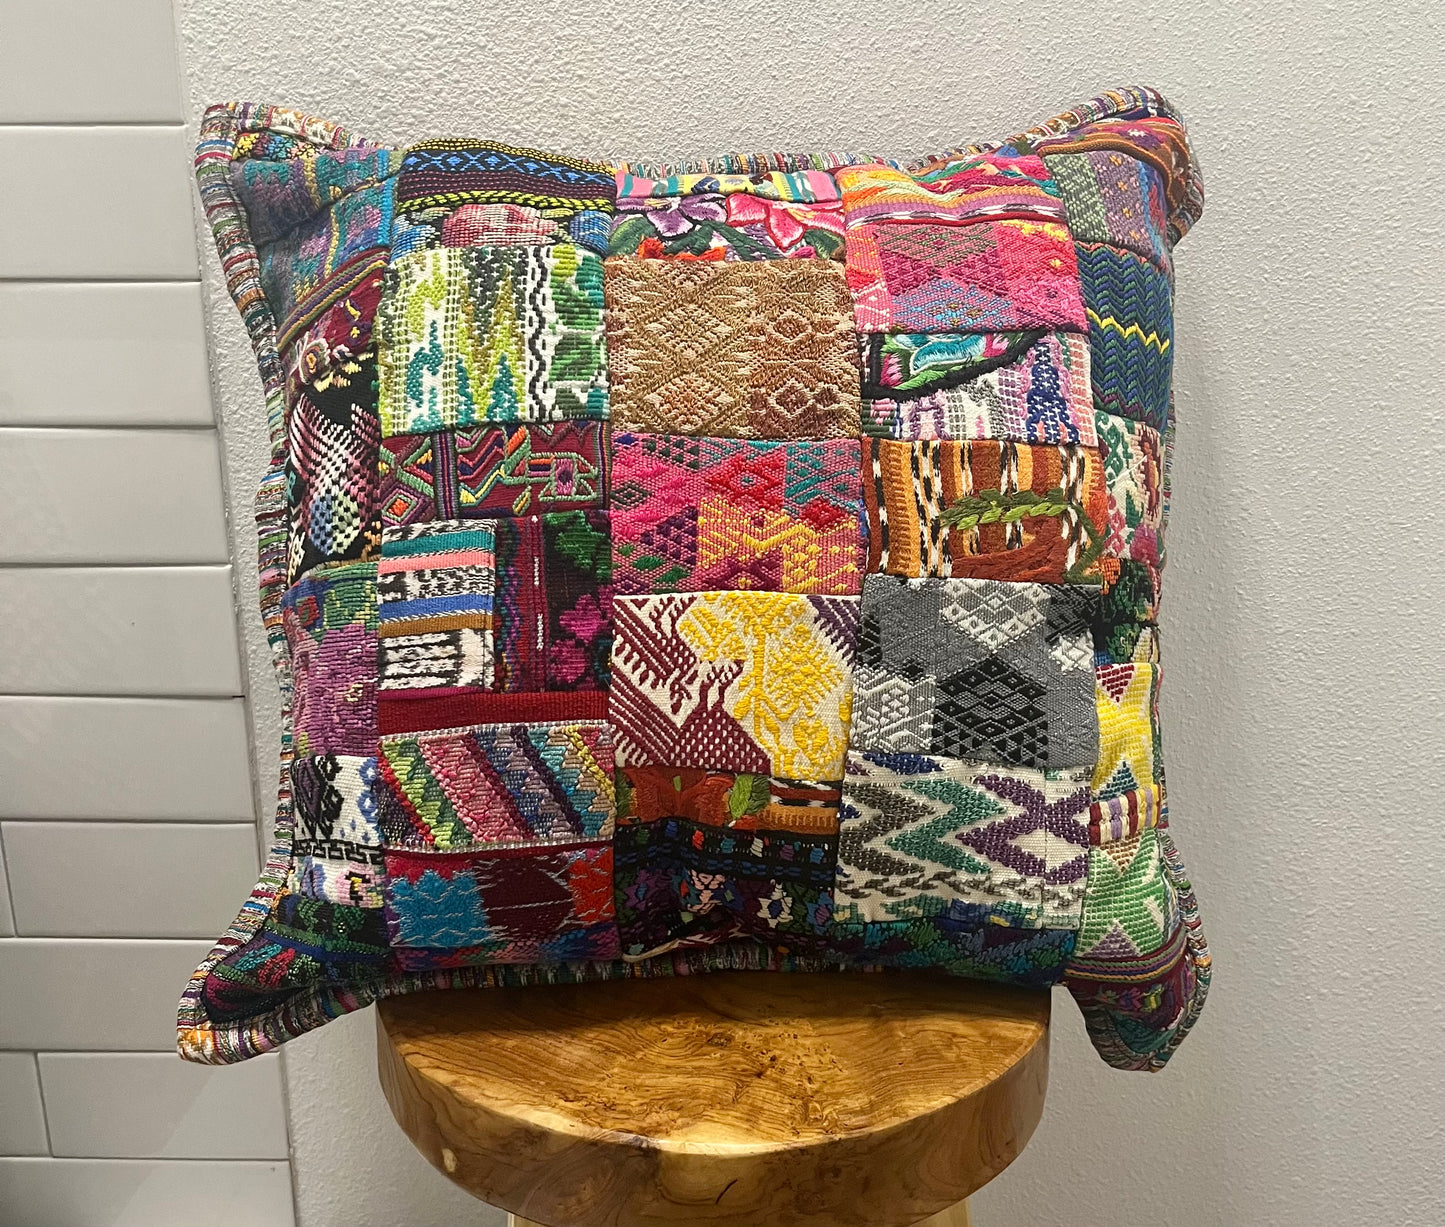 Holbox Mexico Mixed Pattern Throw Pillows- Pink Pueblo Designs